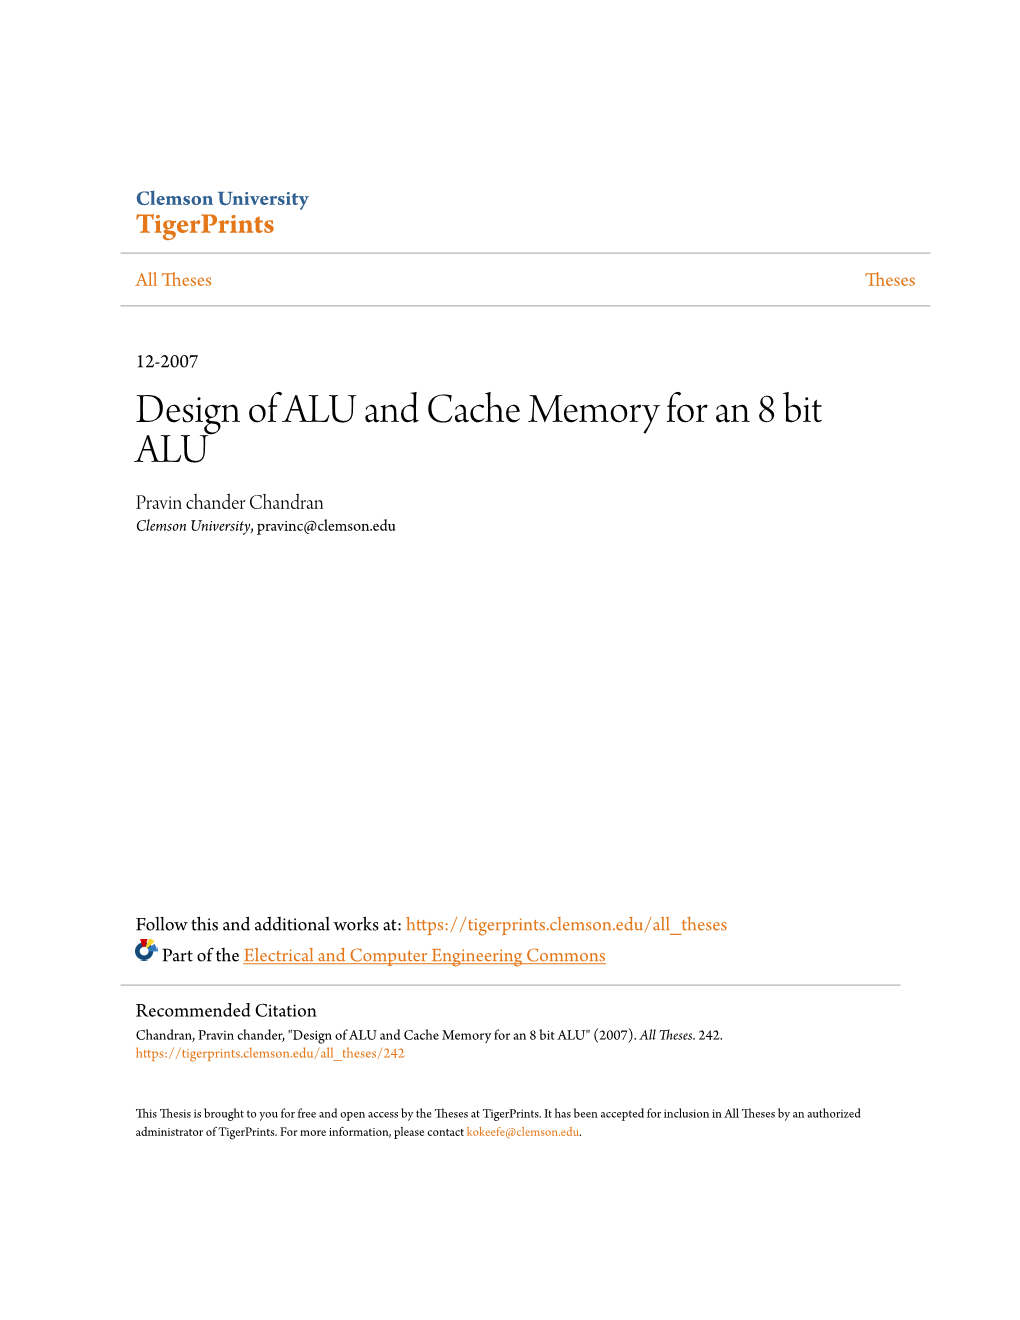 Design of ALU and Cache Memory for an 8 Bit ALU Pravin Chander Chandran Clemson University, Pravinc@Clemson.Edu